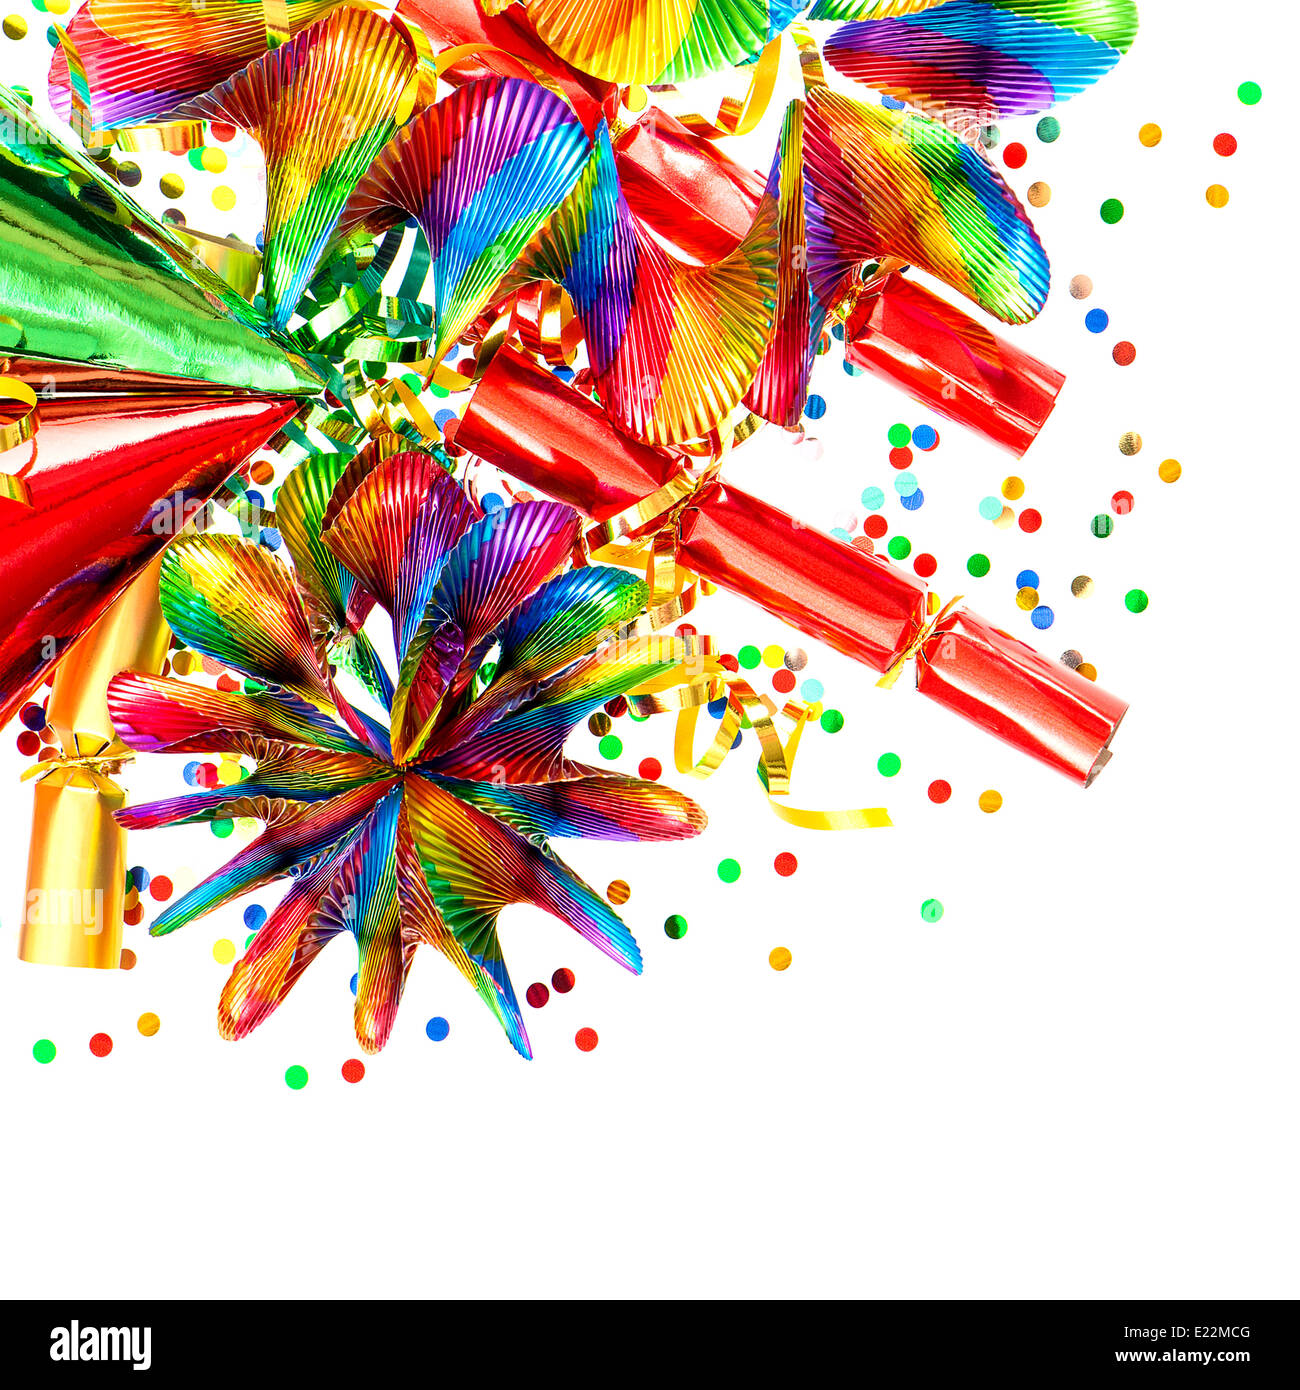 confetti, garlands, streamer. carnival decorations over white background Stock Photo